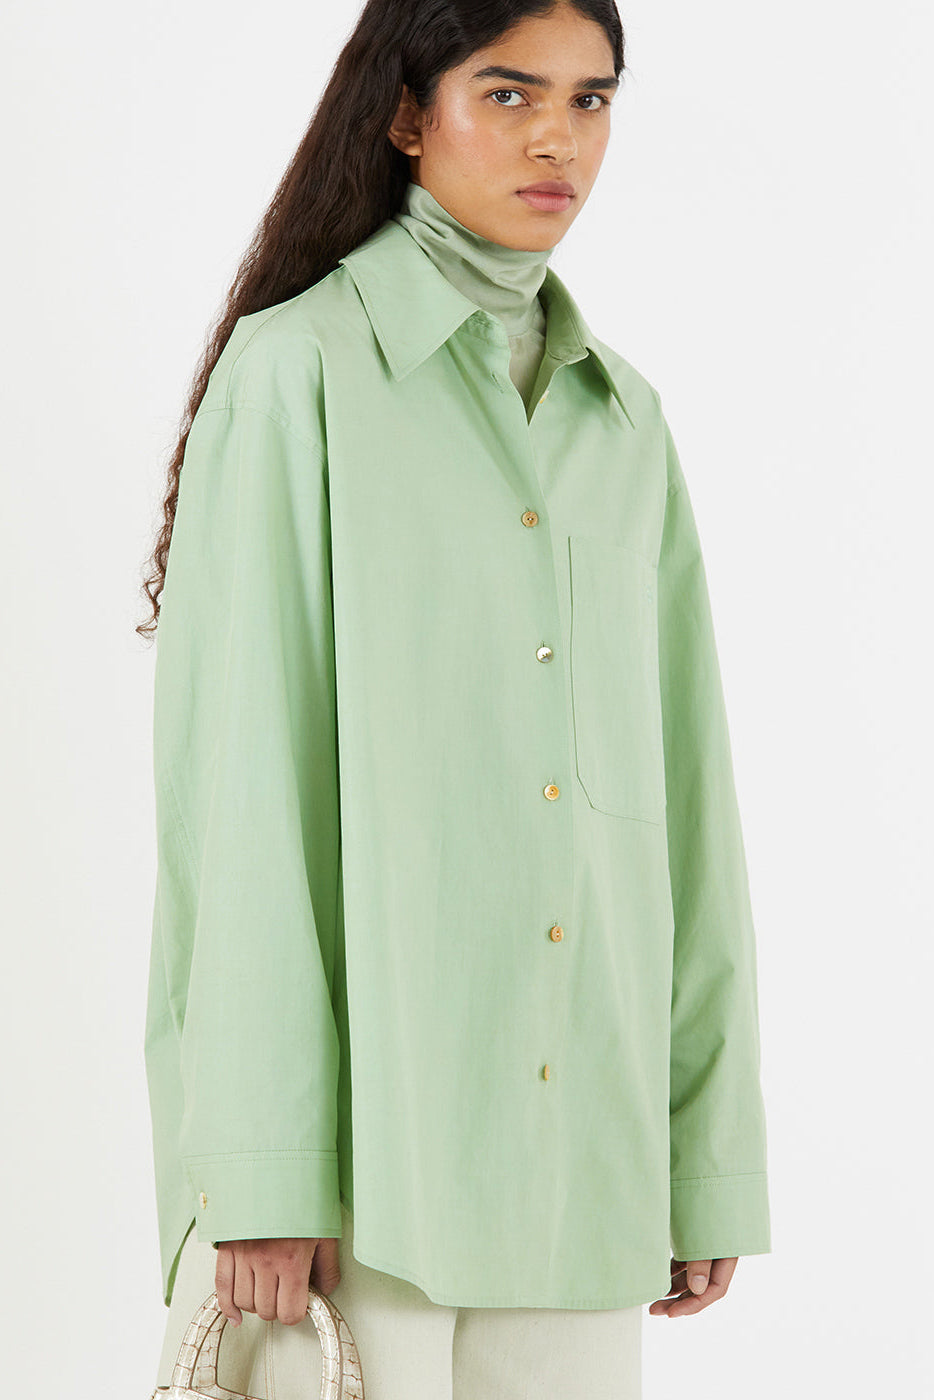 Caprice Shirt in Mint Organic Cotton by Rejina Pyo